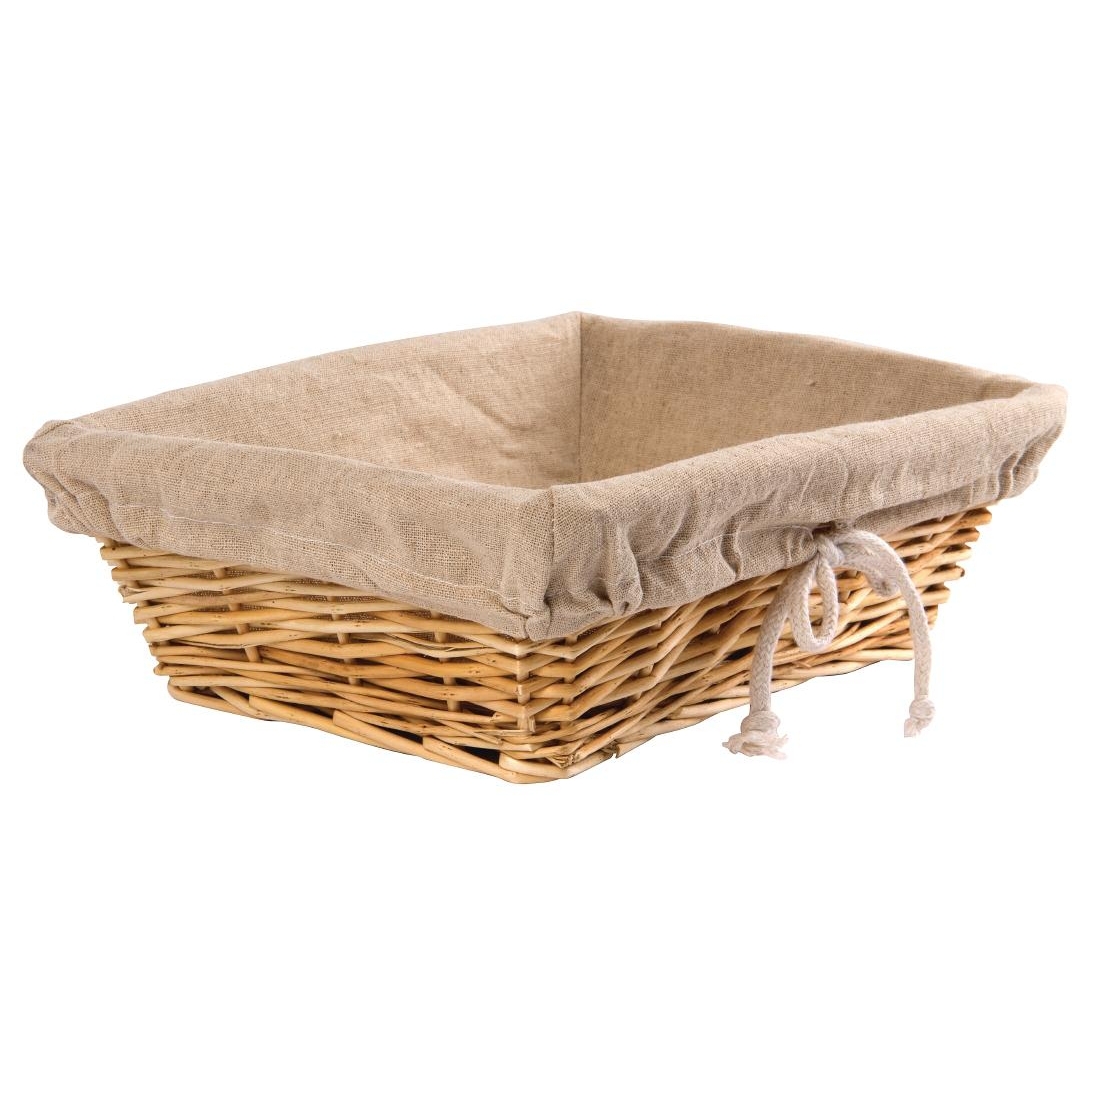 Wicker Rectangular Basket